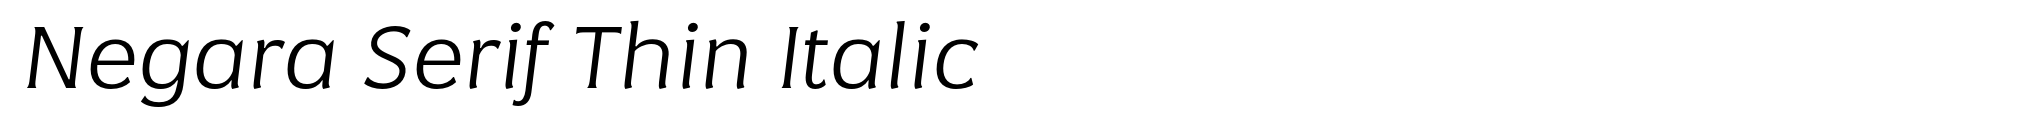 Negara Serif Thin Italic image